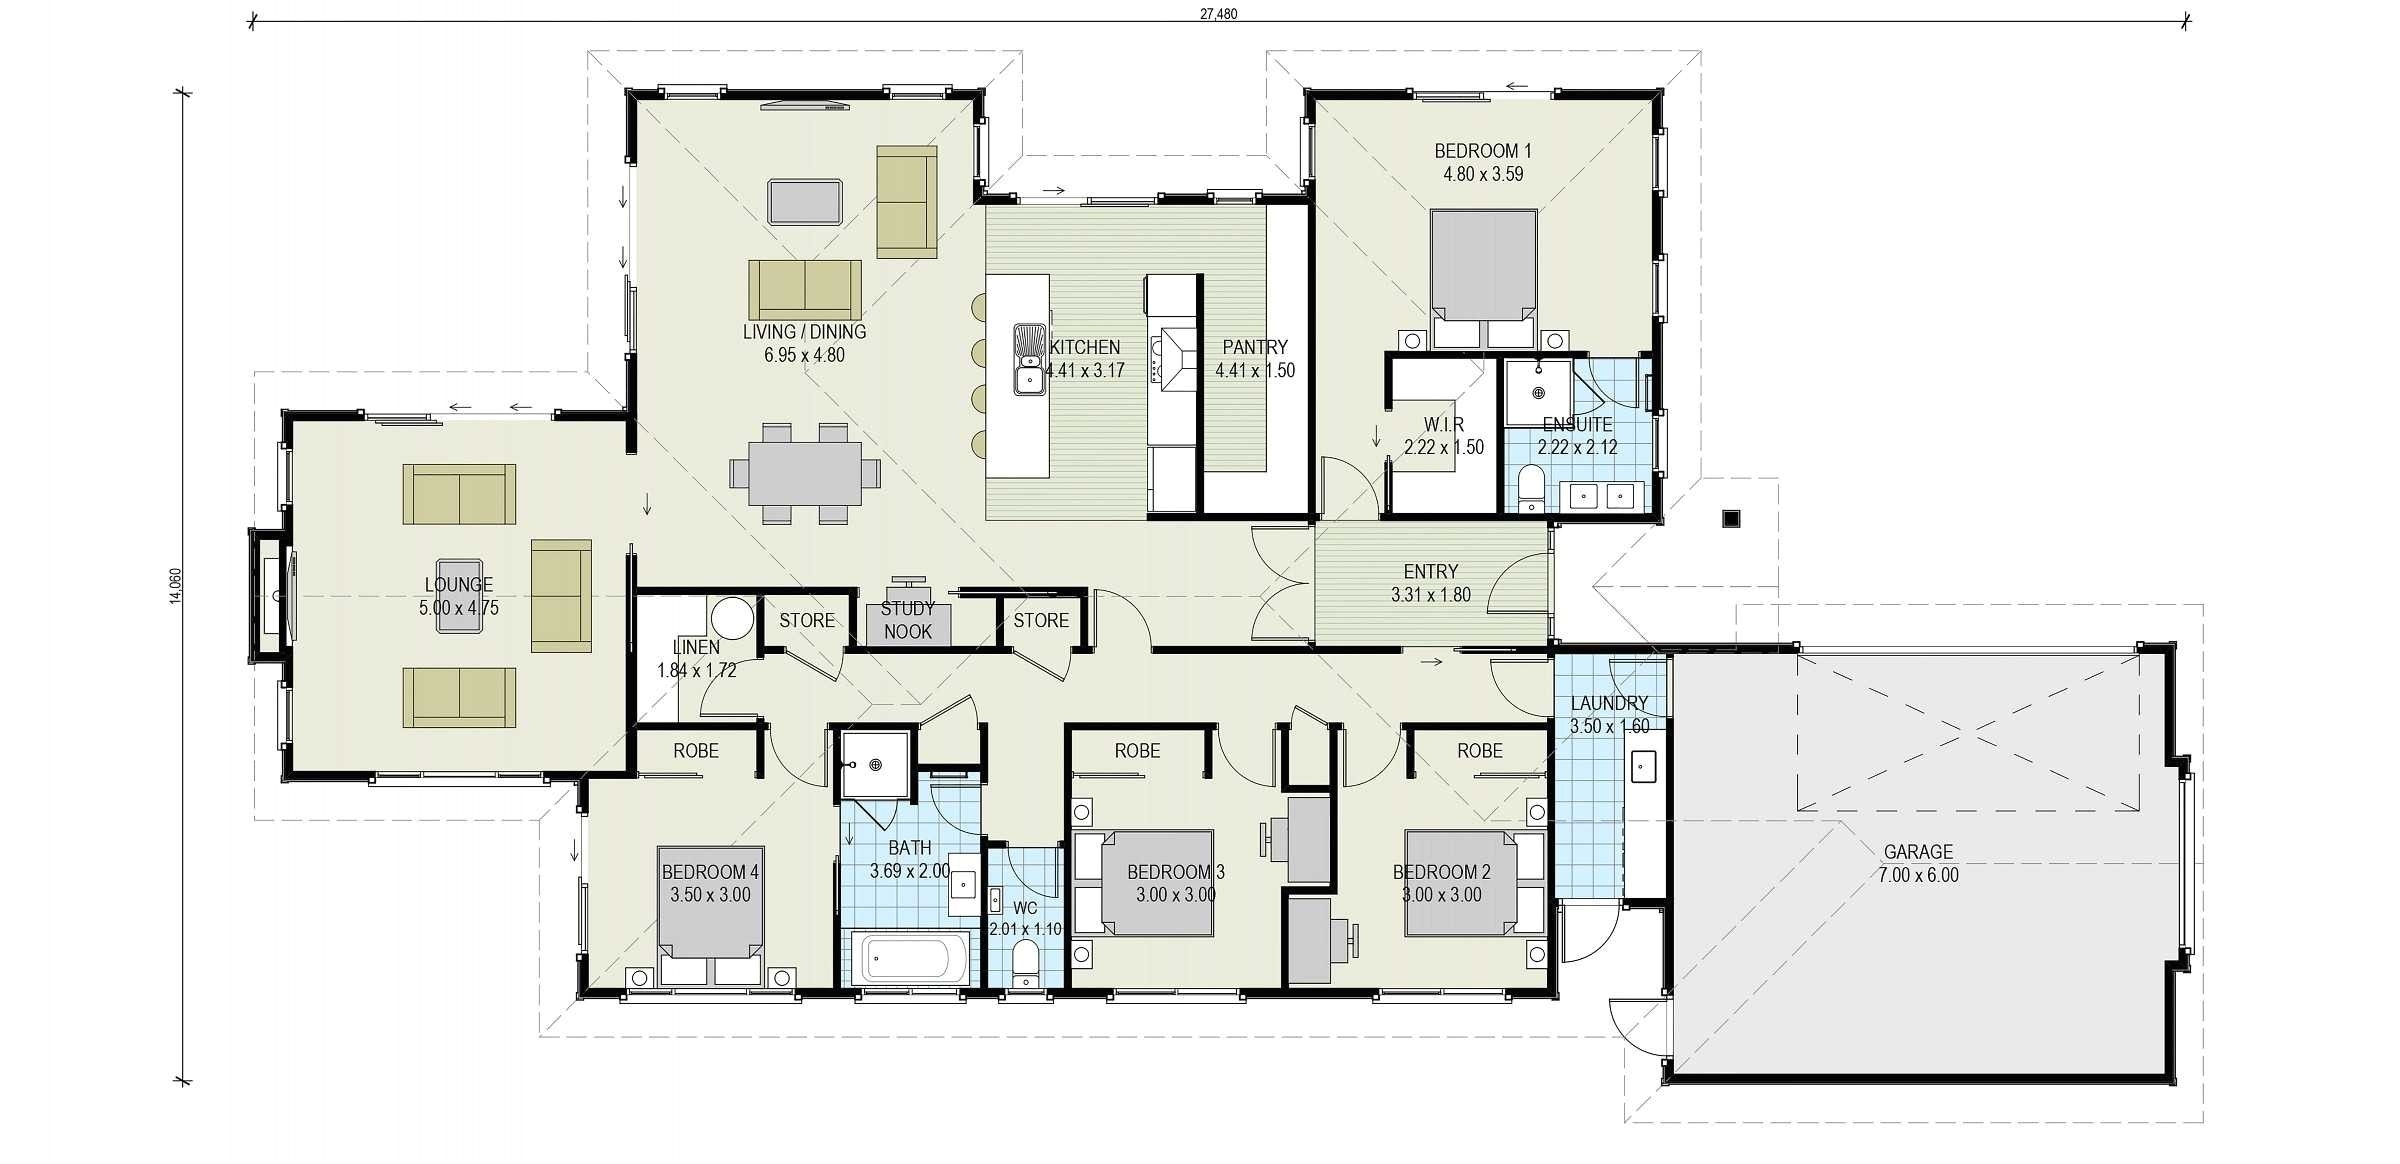 house plans software fresh house plan design lovely floor plan software fresh house plan s of